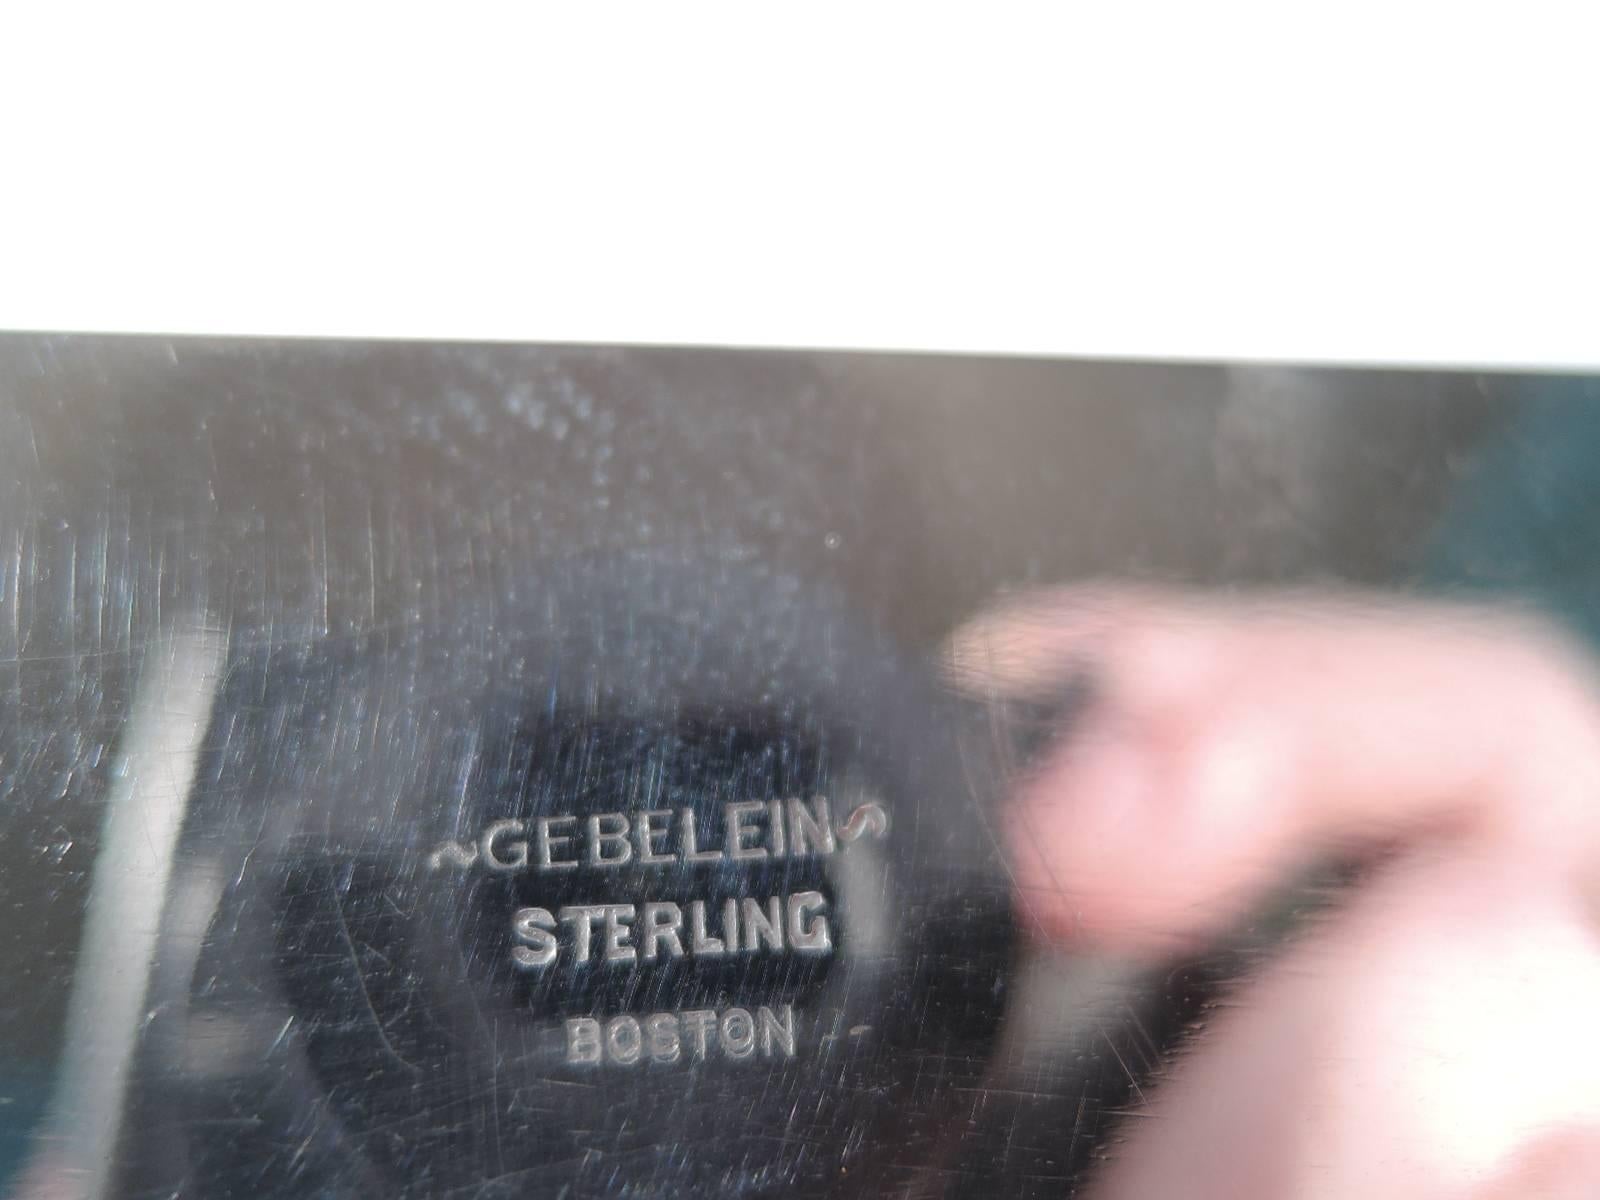 20th Century Modern Handmade Sterling Silver Desk Box by Gebelein in Boston